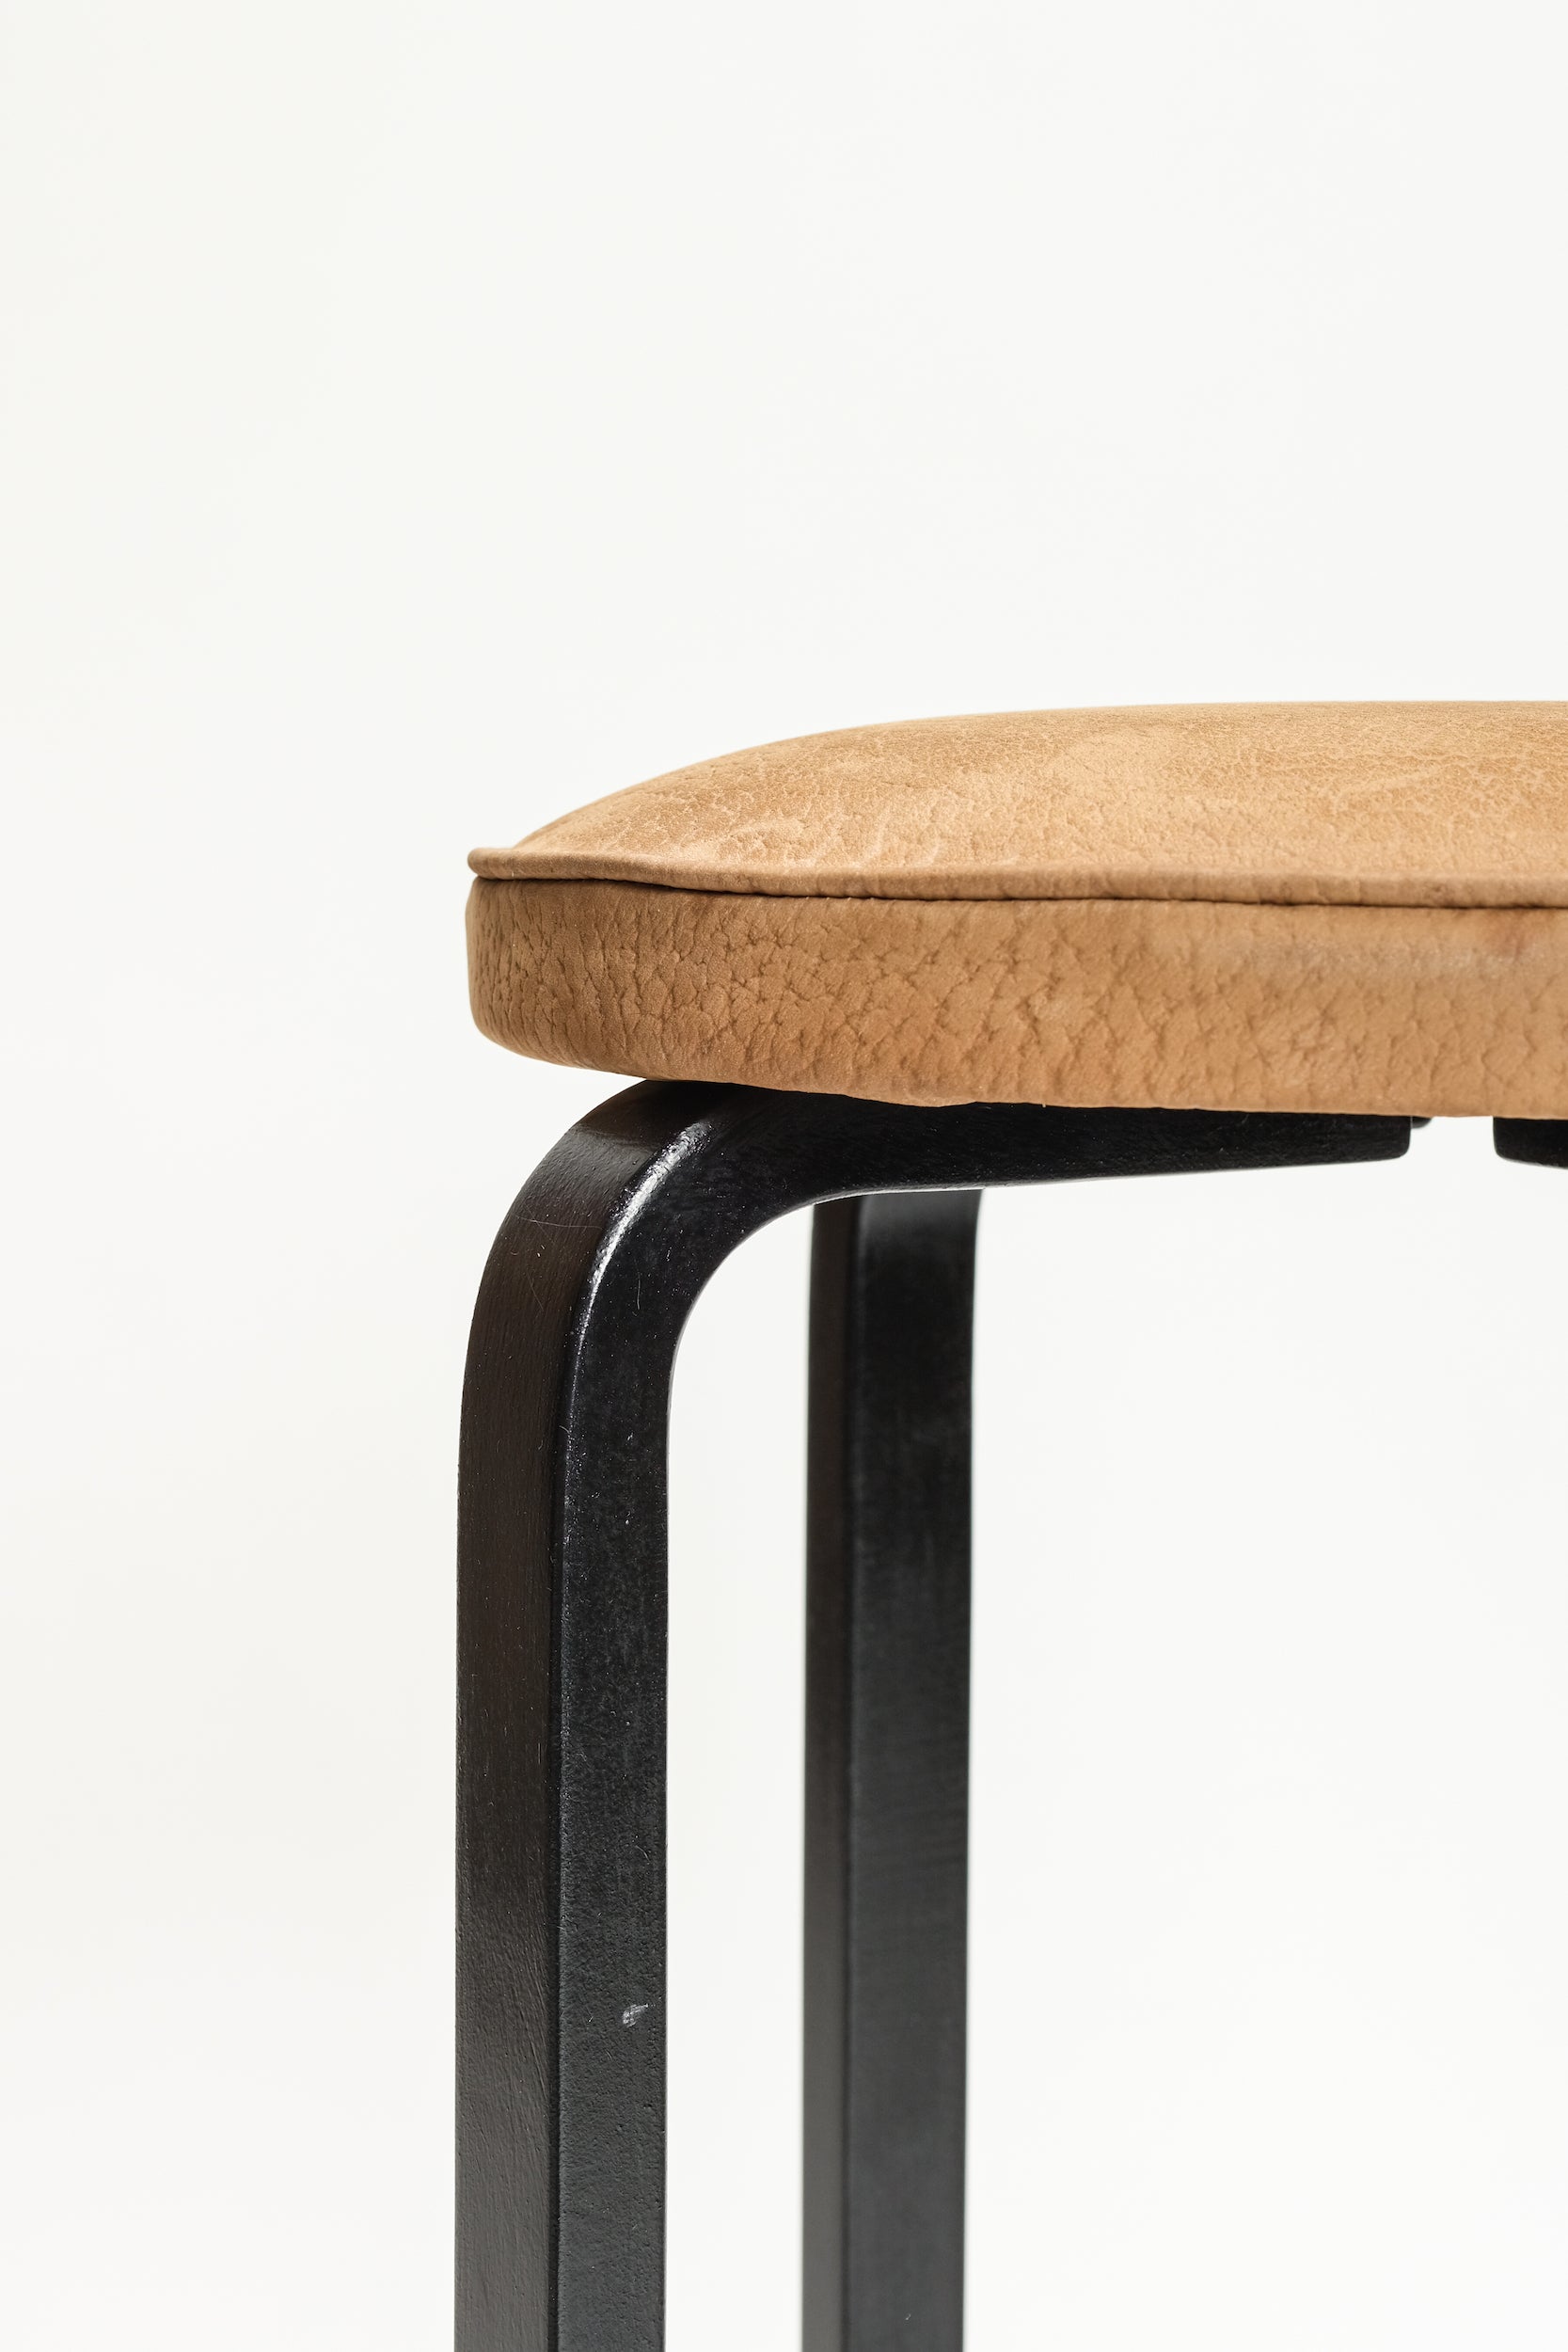 Alvar Aalto, two bar chairs, Artek, Model 64, 40s